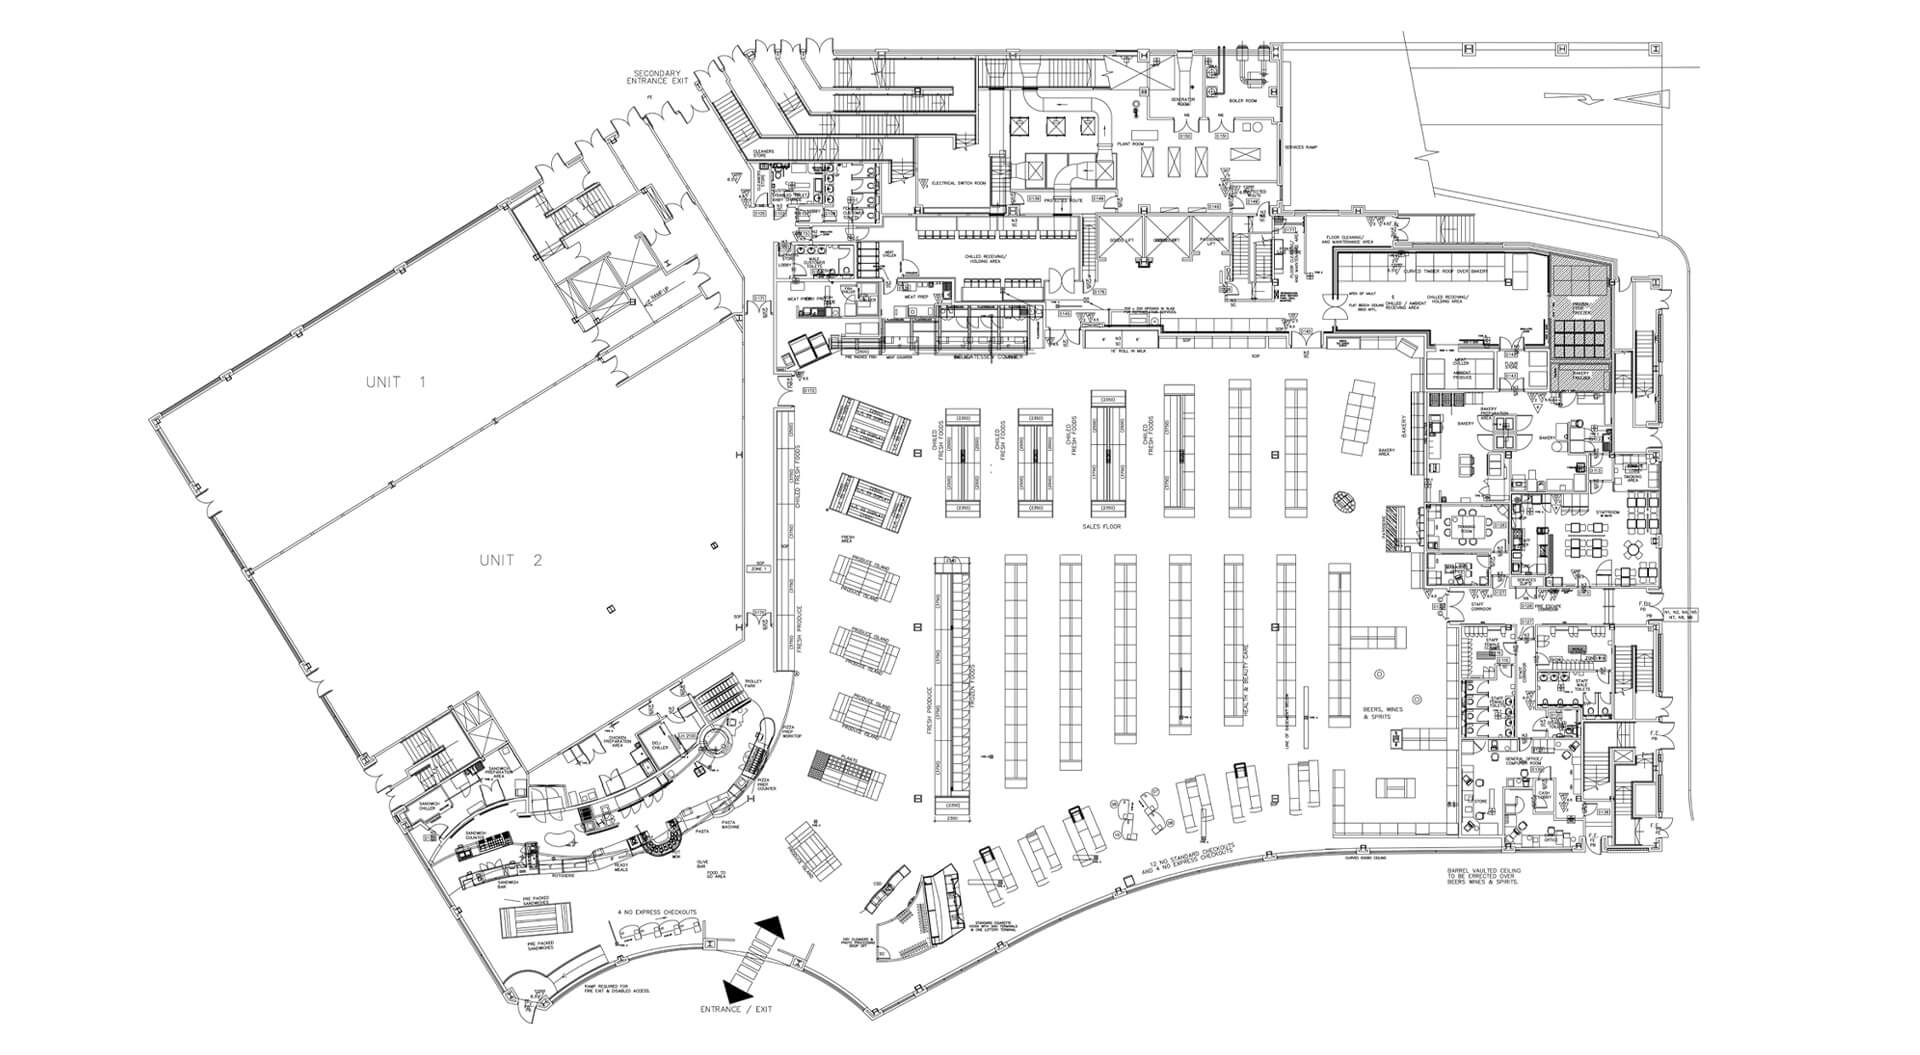 Safeway supermarket floor plan layout and design of the customer journey